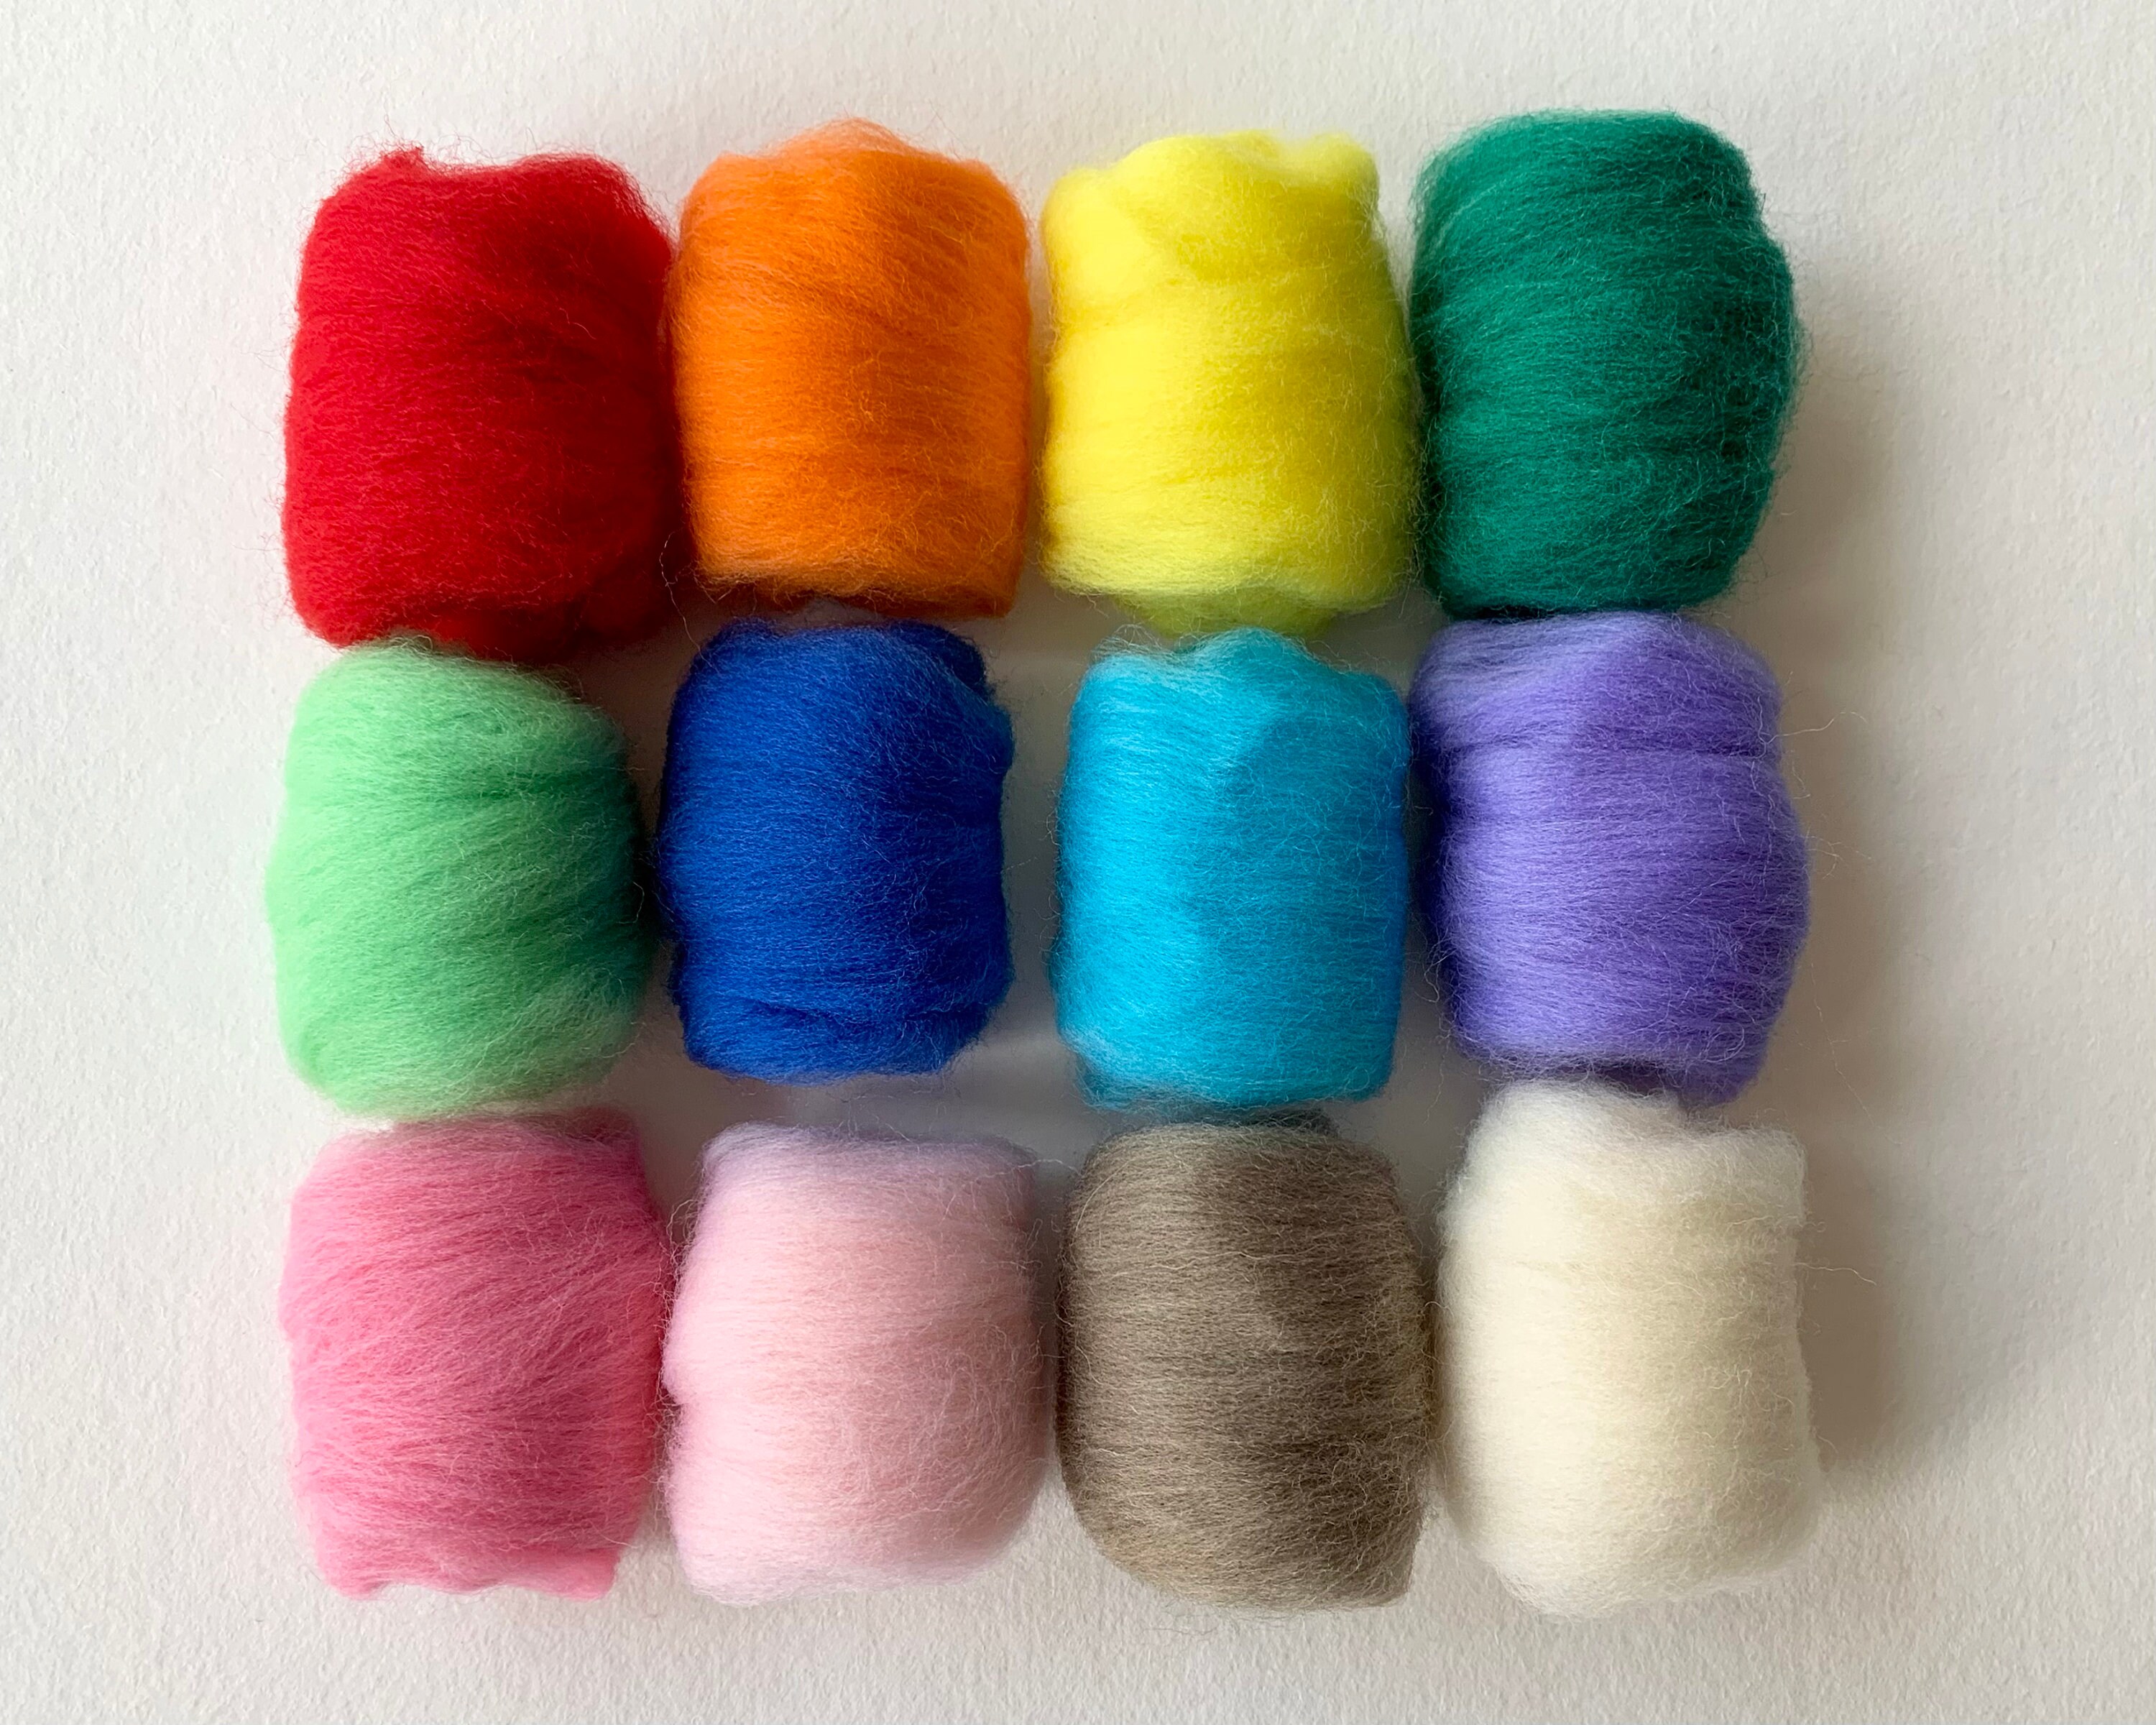 LMDZ Needle Felting Kit 50 Colors Wool Roving with Fibre Wool Yarn Felting Needles  Felting Supplies For Wool Felting Beginners